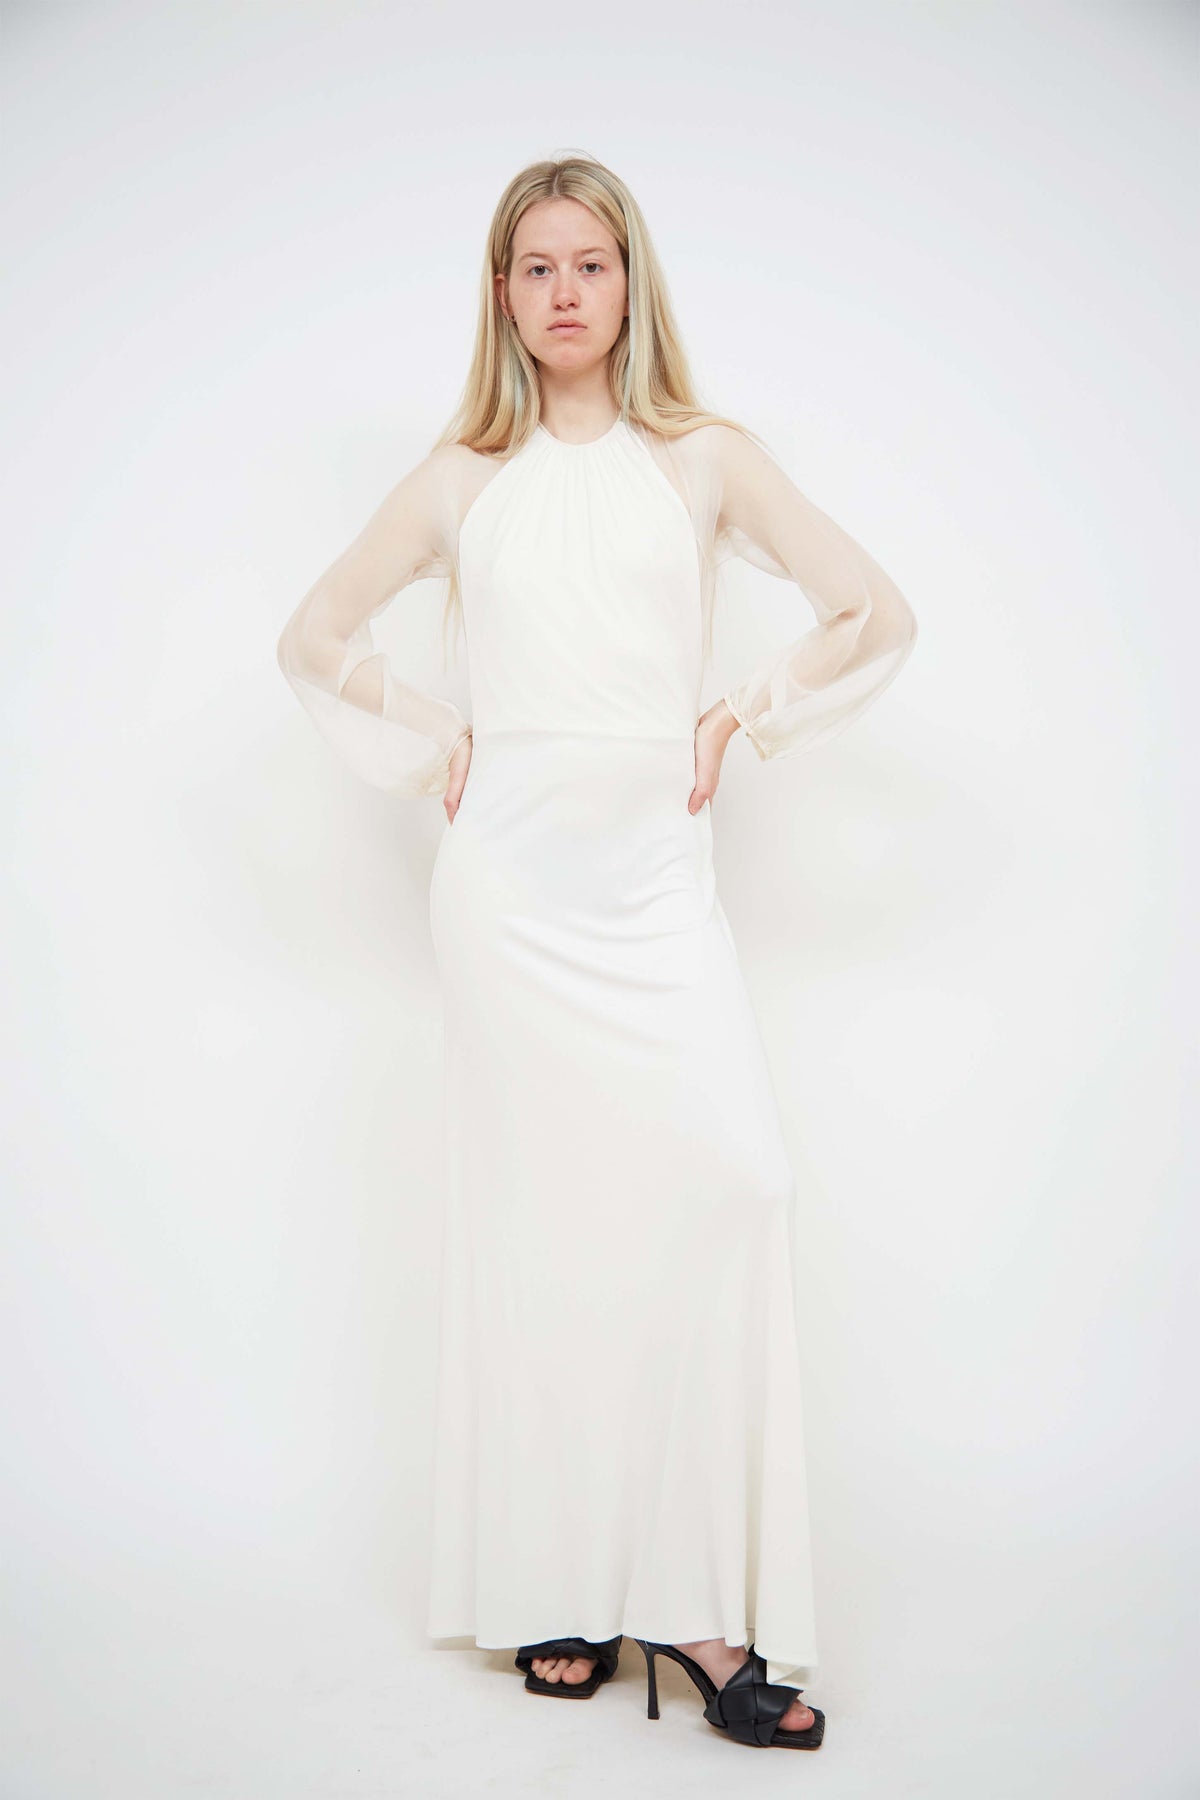 Gianni Versace dress